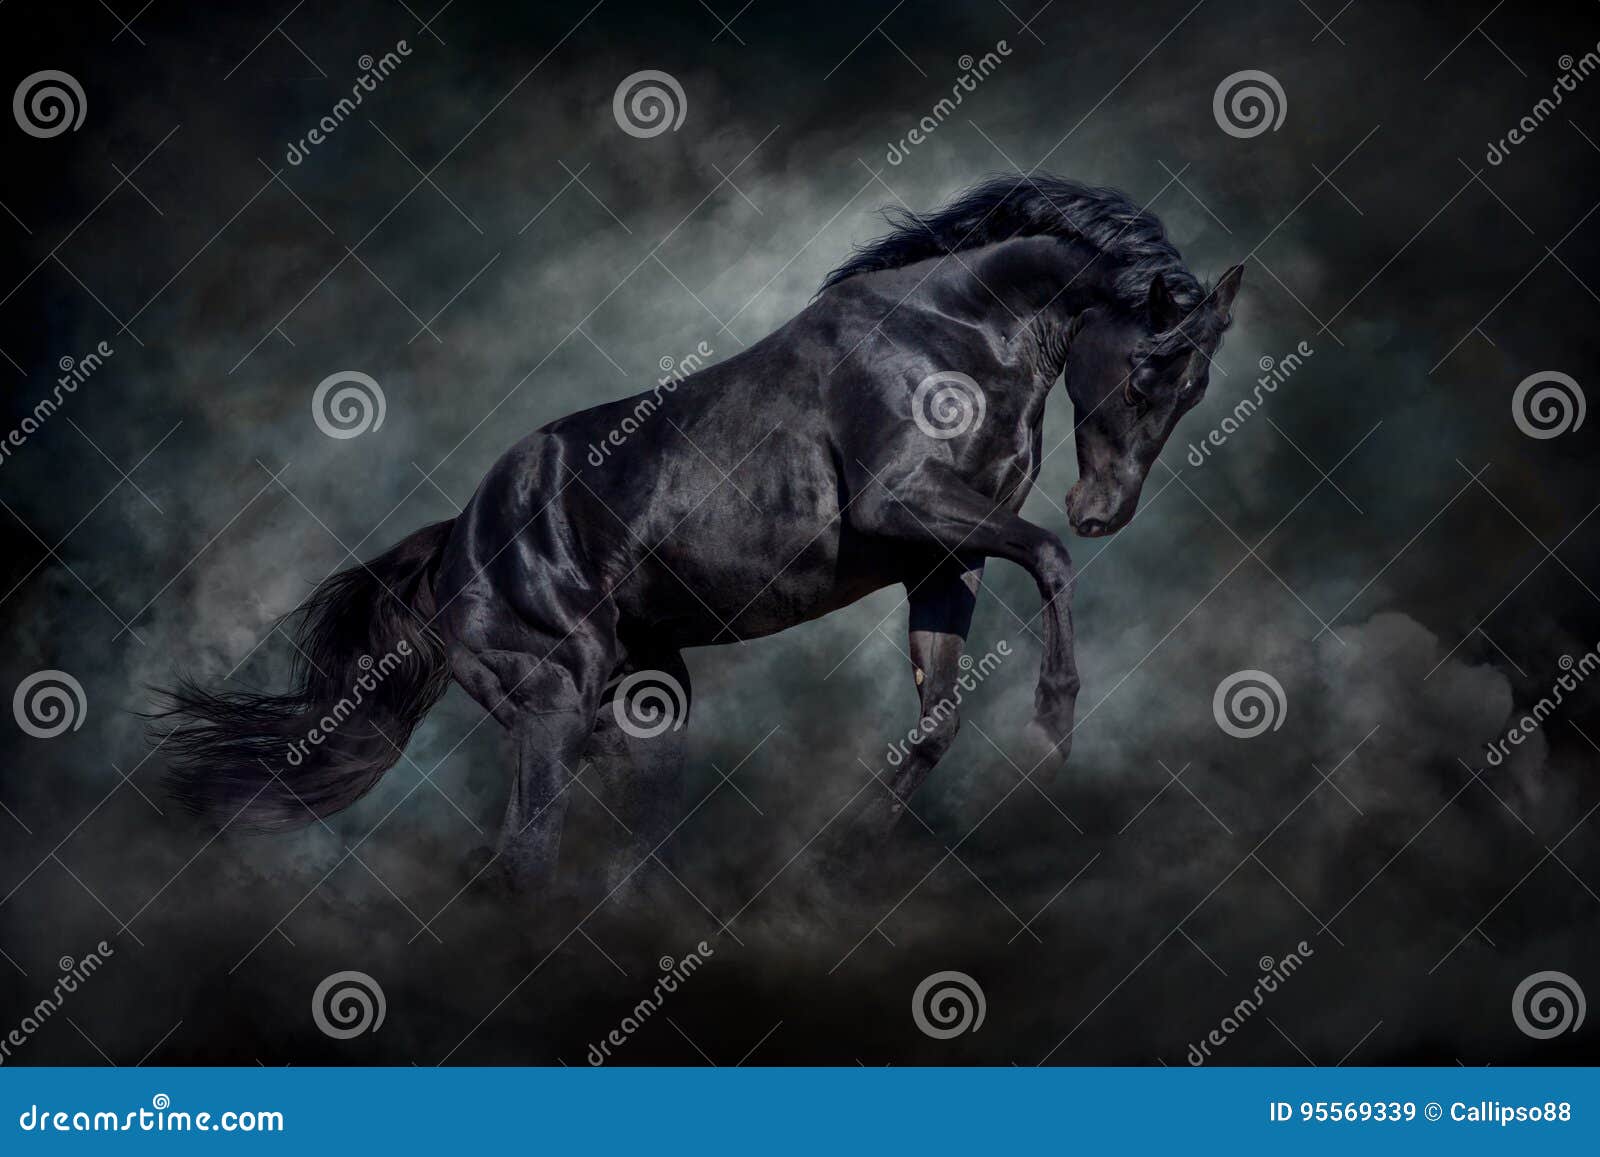 black stallion in motion